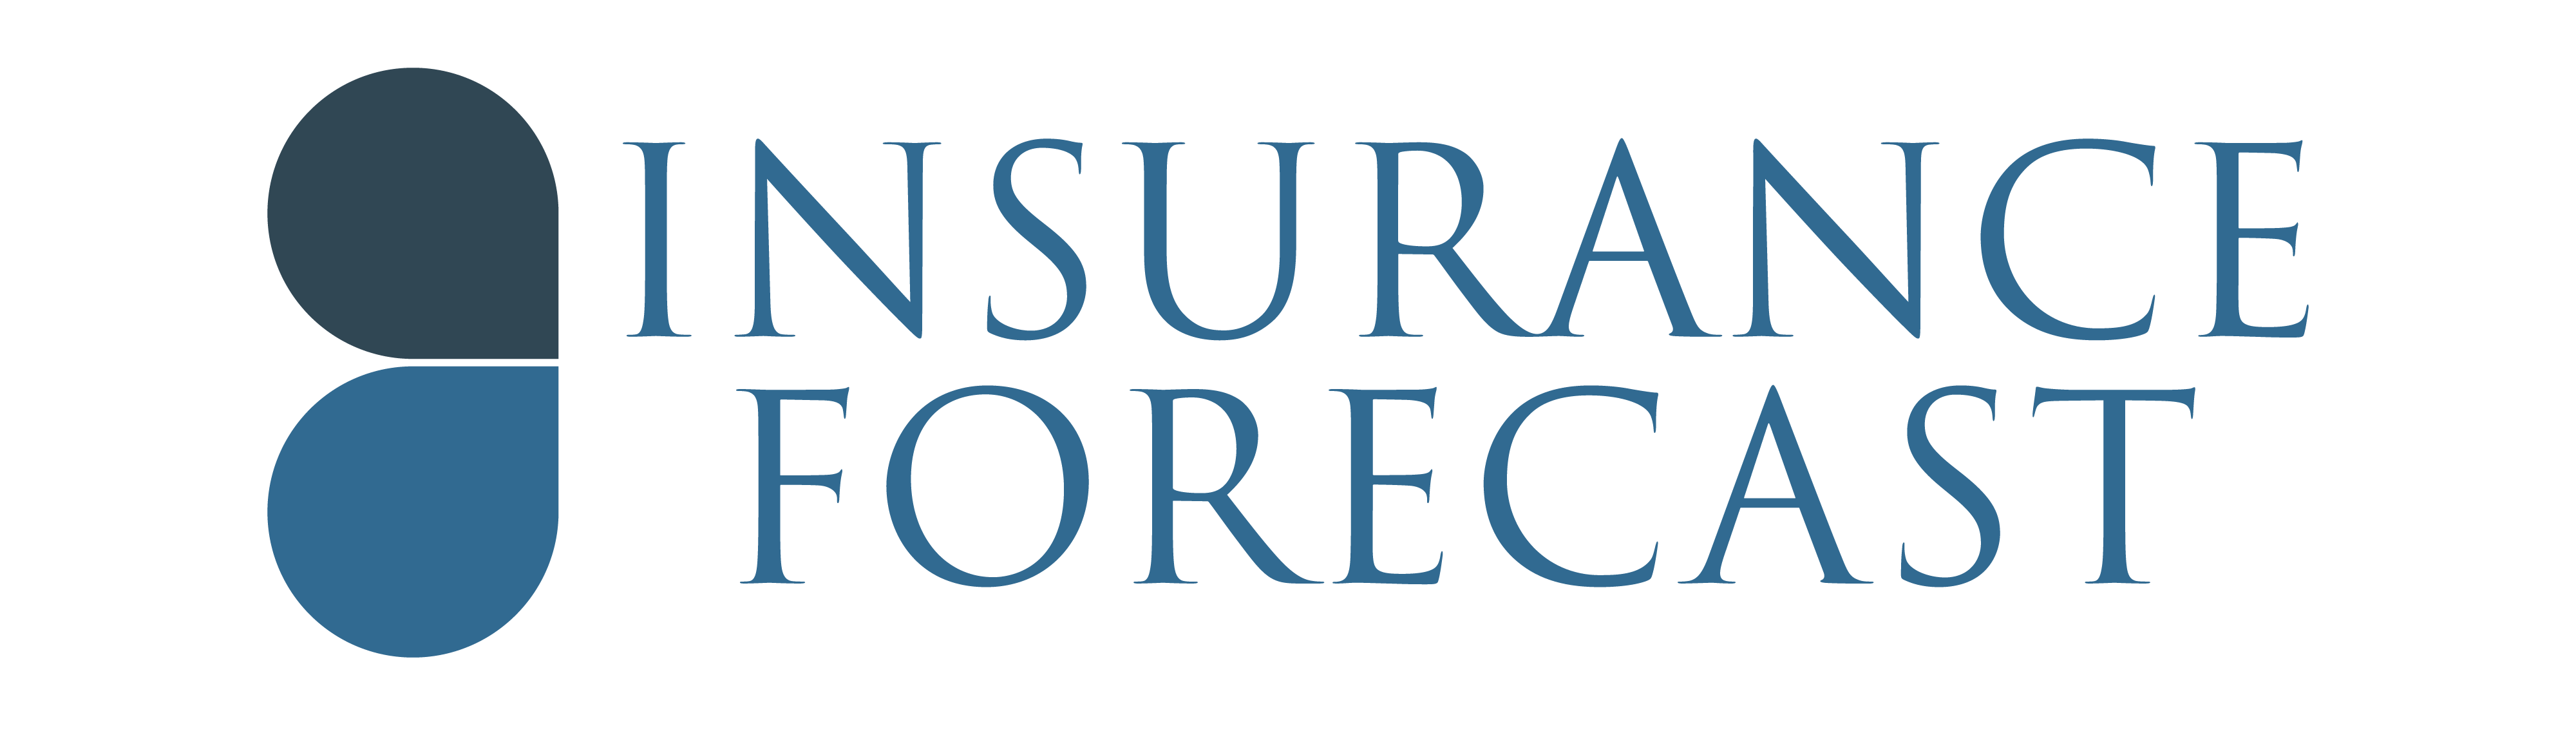 Insurance Forecast Logo